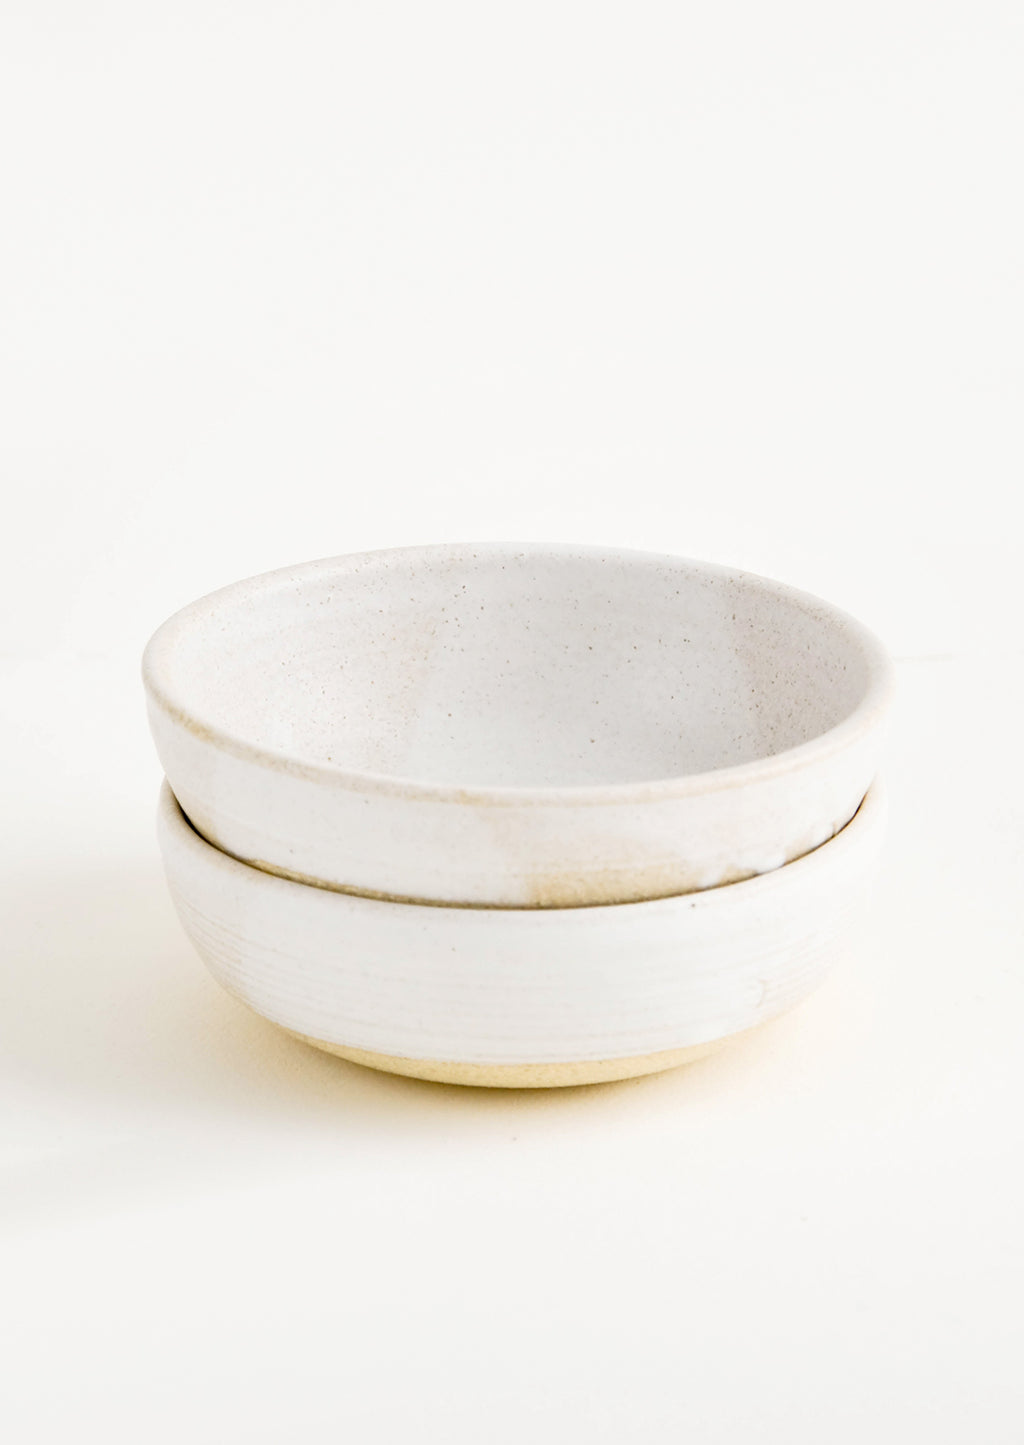 Warm White: Rustic Ceramic Yogurt Bowl in Warm White - LEIF